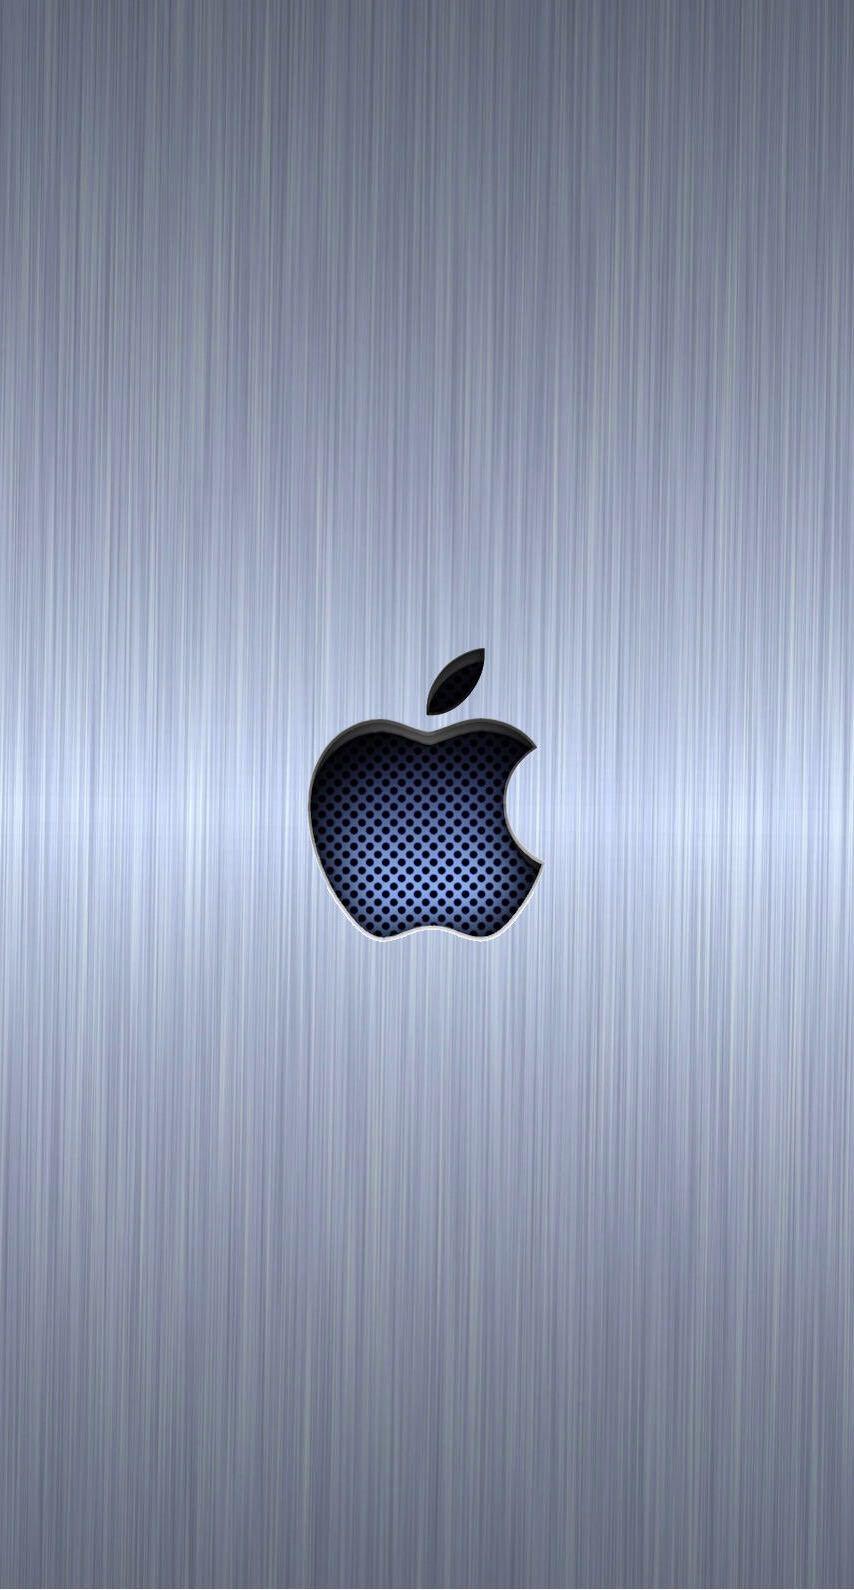 Apple logo cool blue silver. wallpaper.sc iPhone6s. Apple